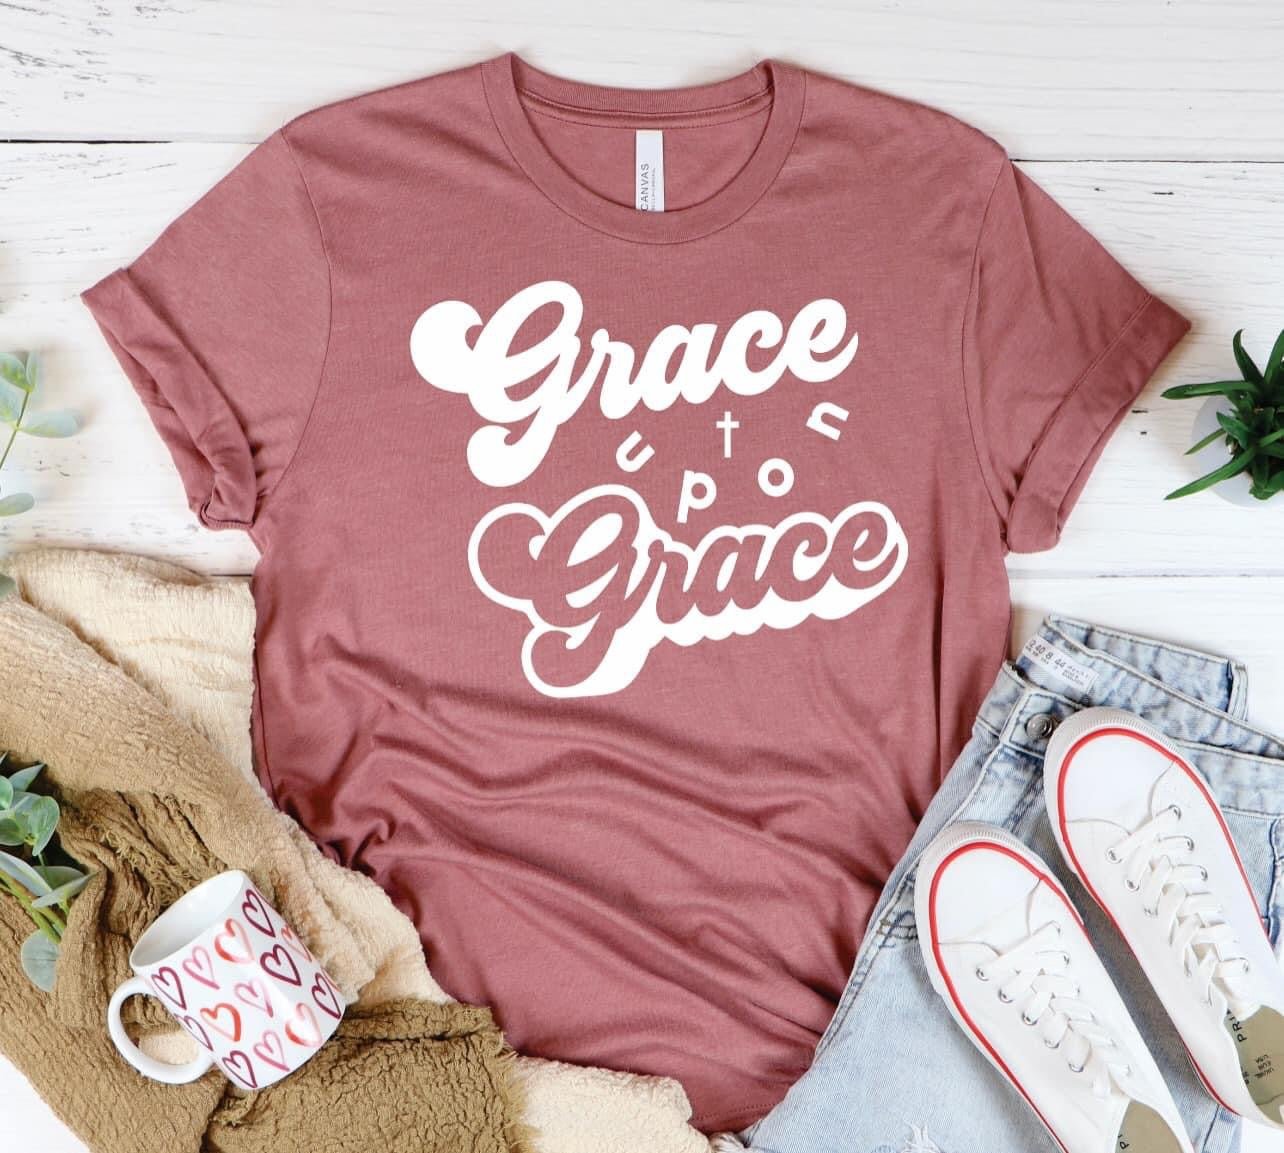 Grace Upon Grace Tee